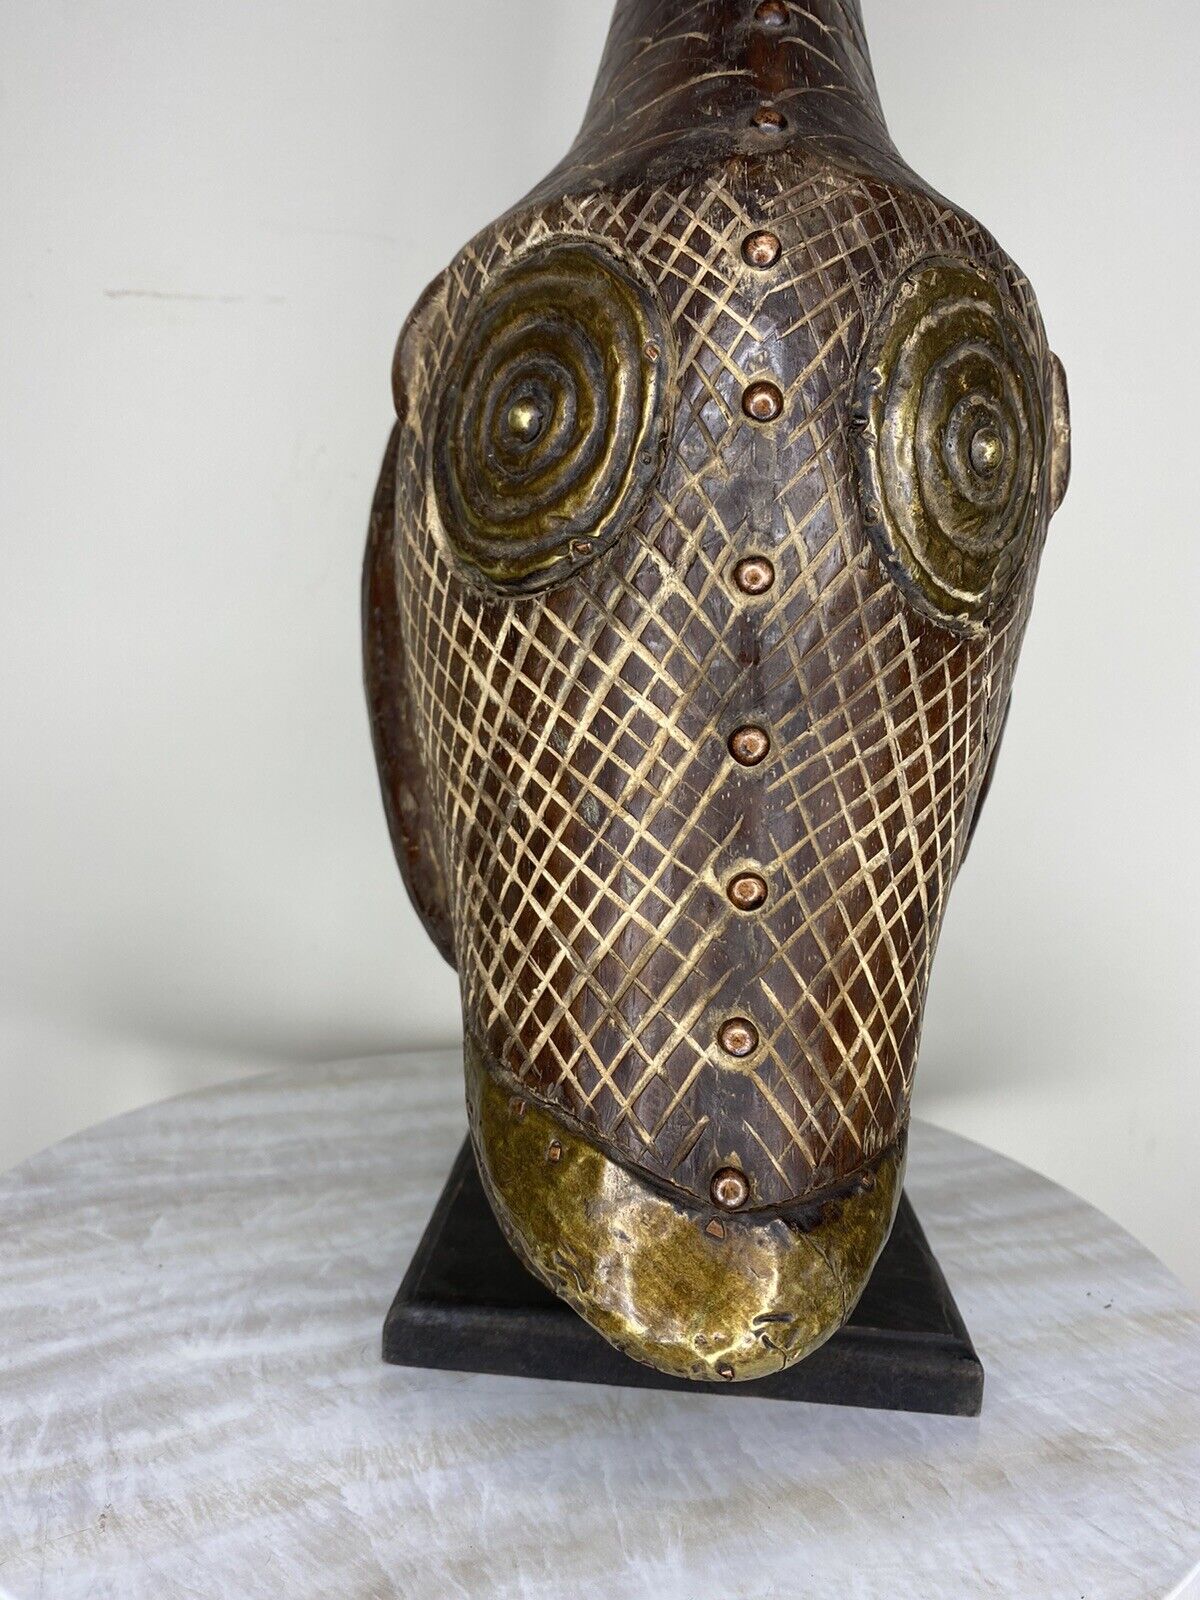 Bobo Fish Headcrest mask Burkina Faso African Art on stand